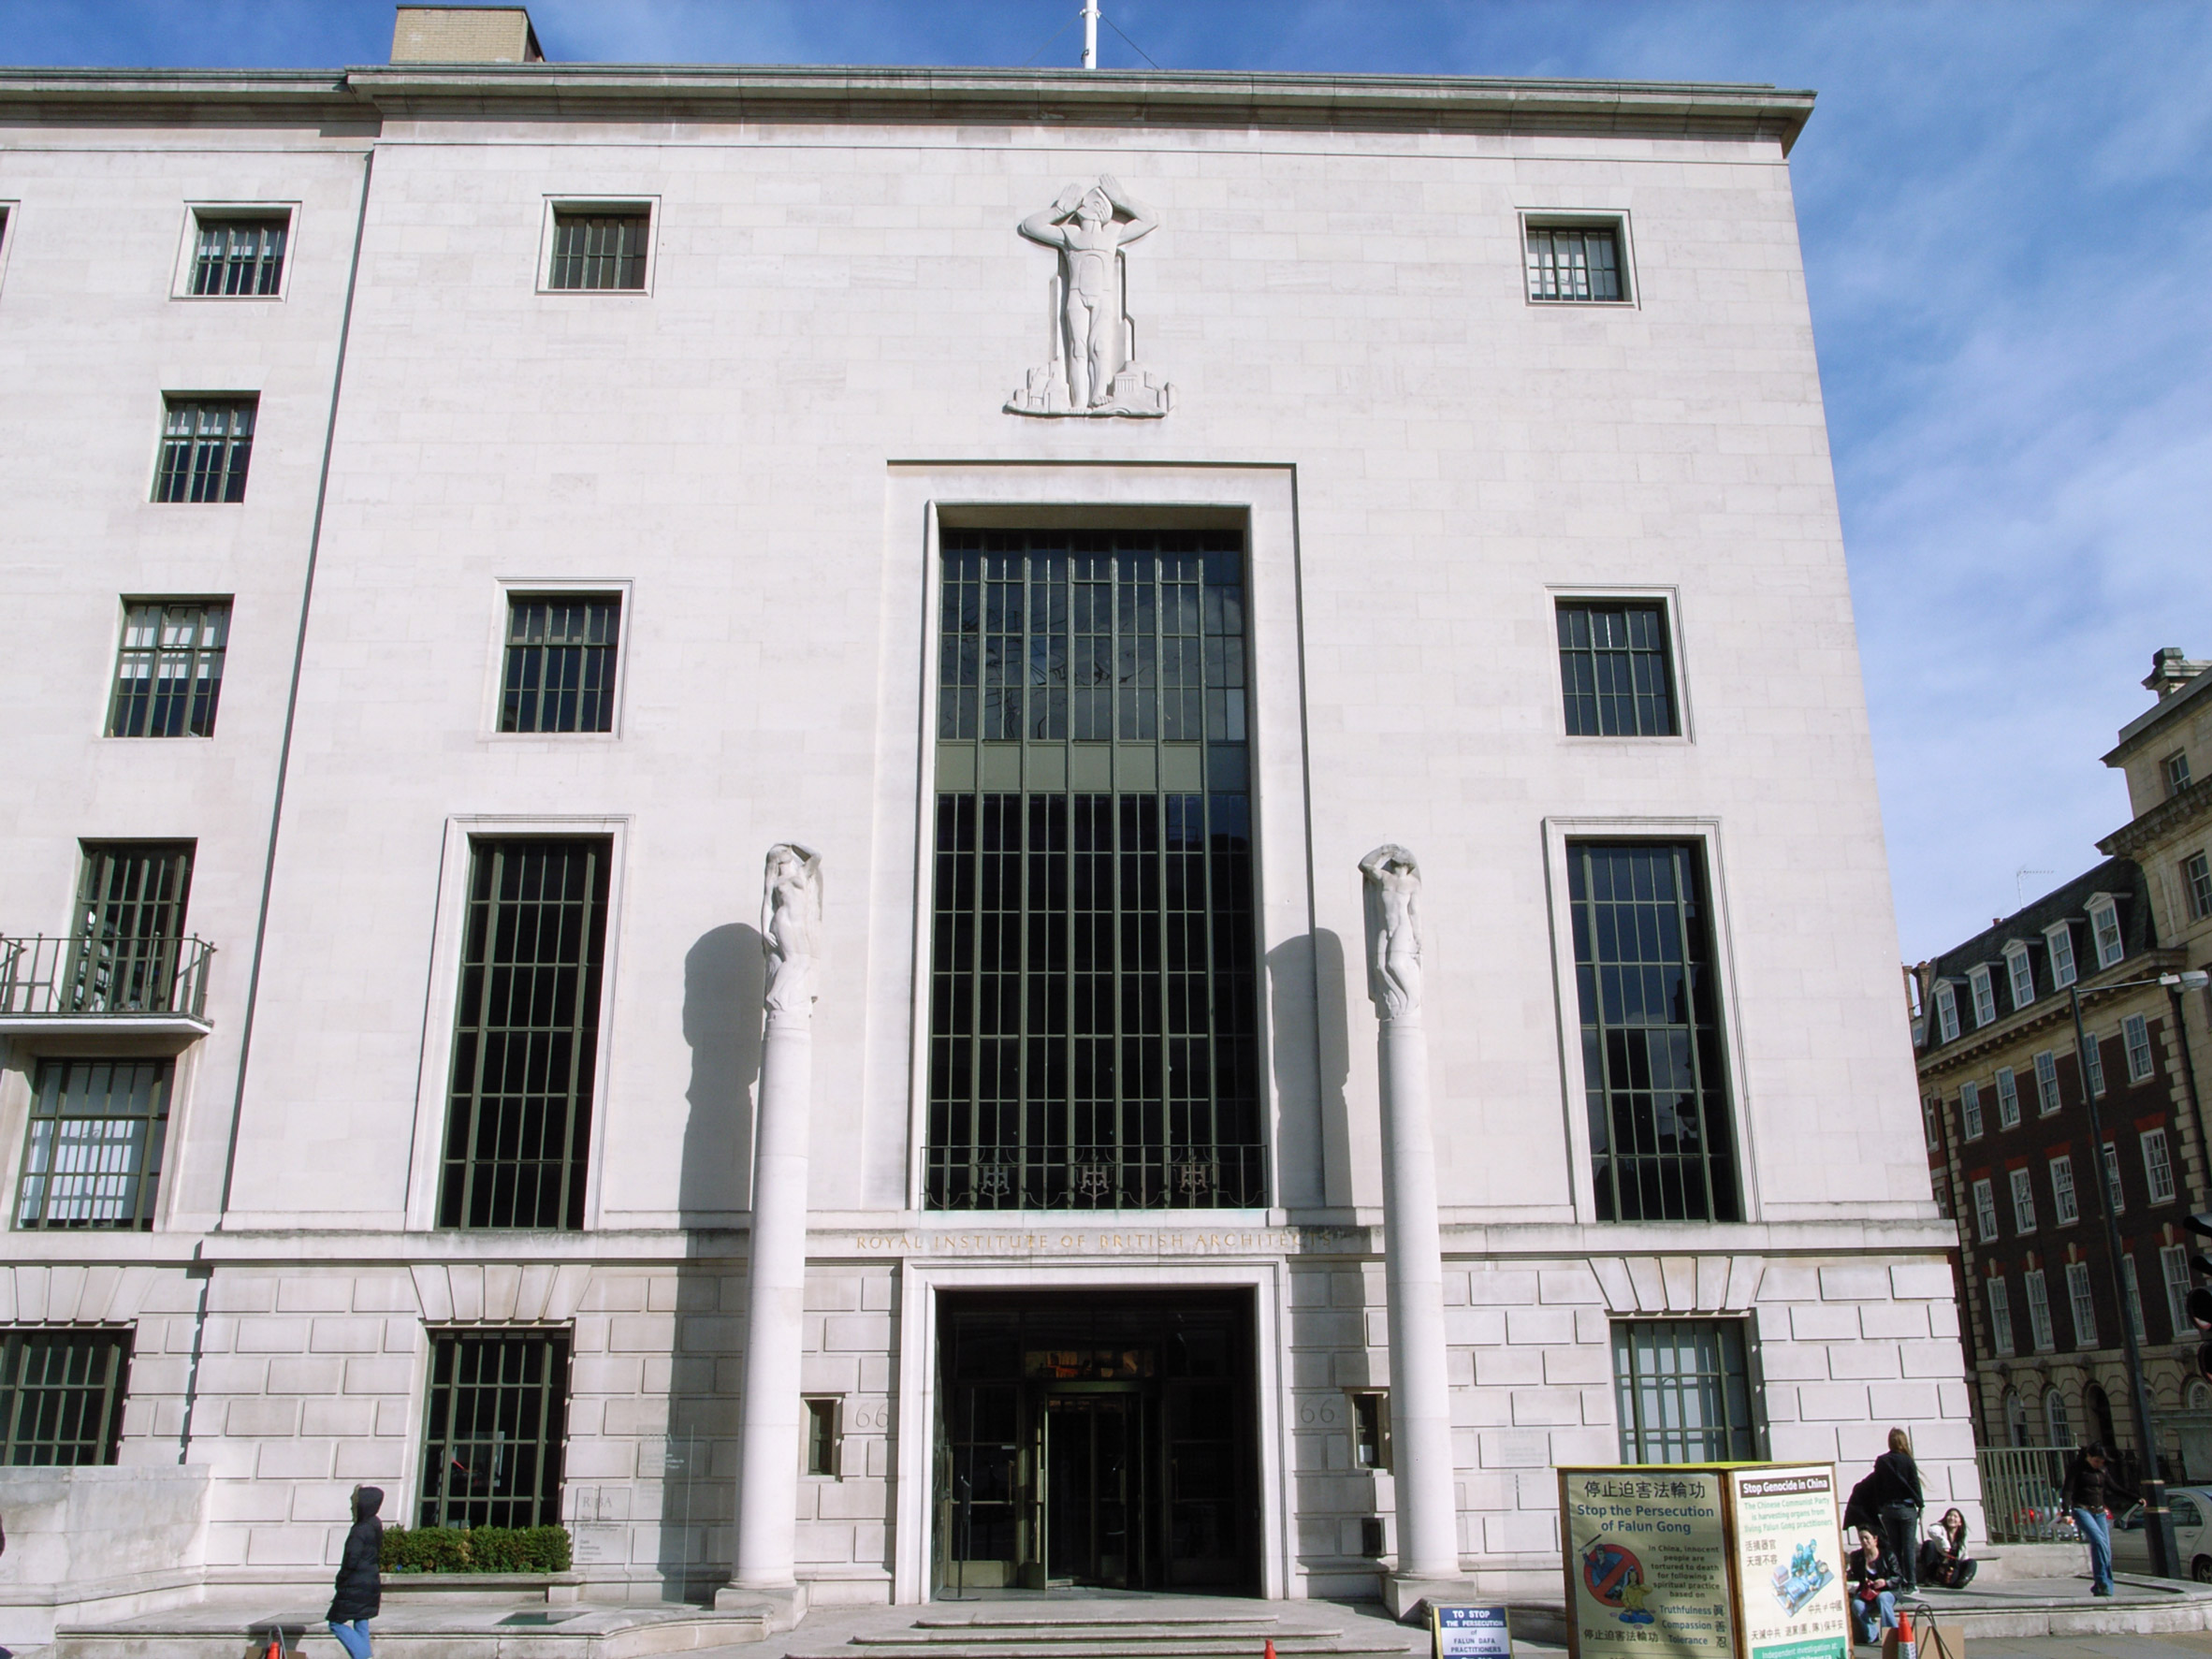 Facade of RIBA headquarters in London